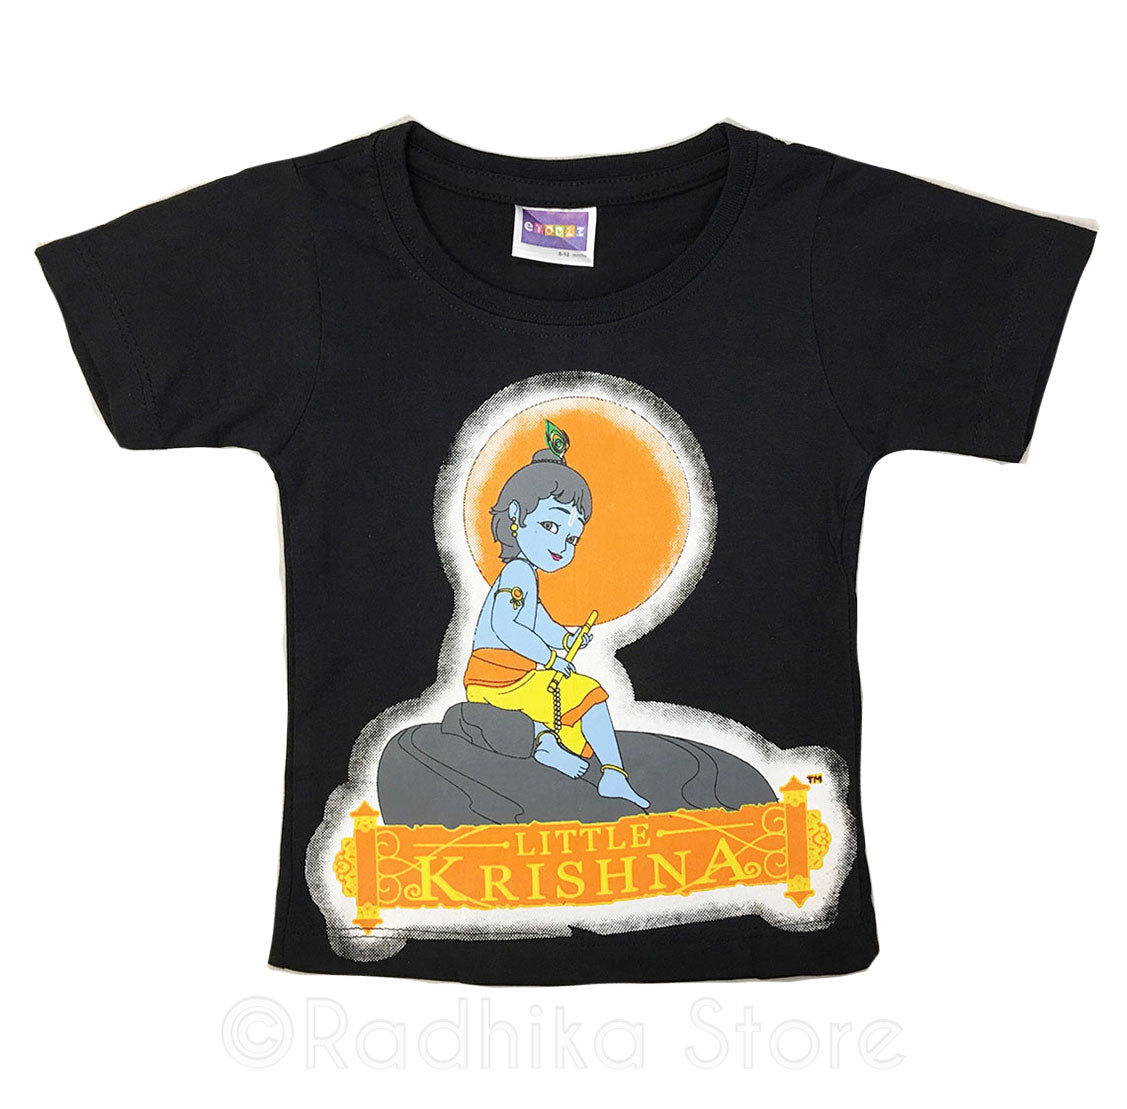 Krishna Basuri Sr Kids T-Shirt